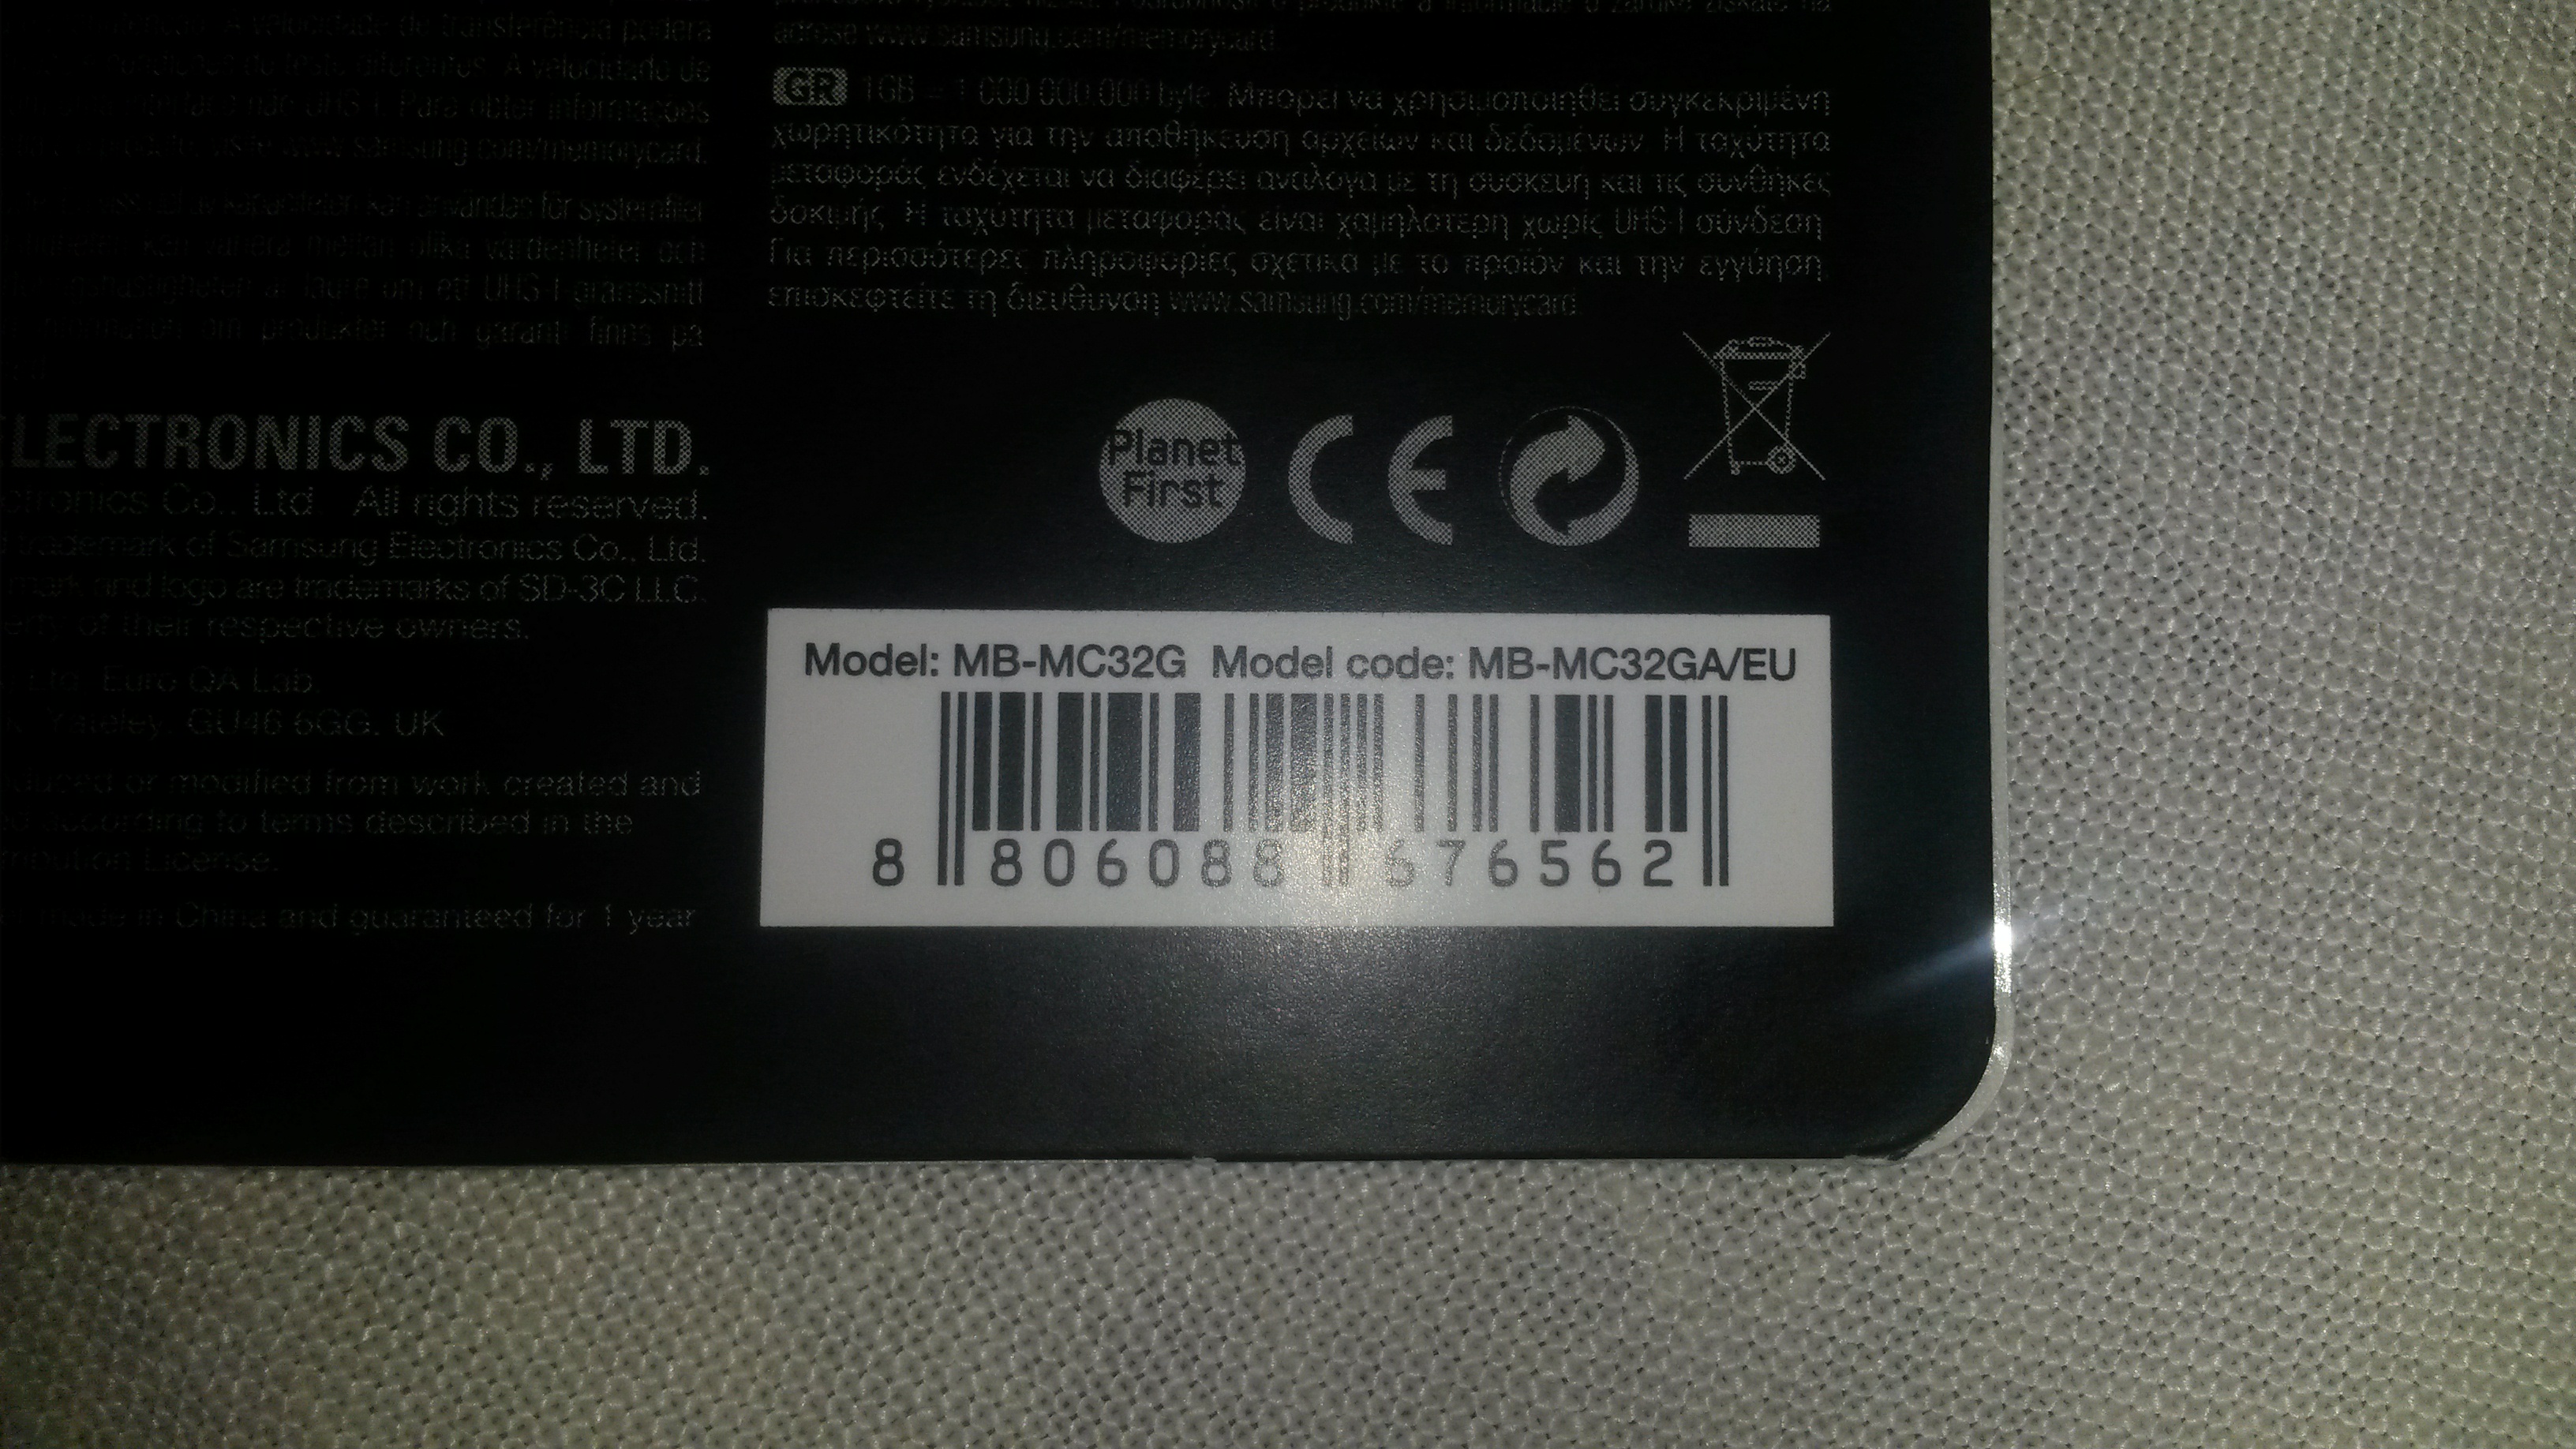 Samsung Evo Plus MB-MC32GA/EU made in China-real or fake? - Samsung ...